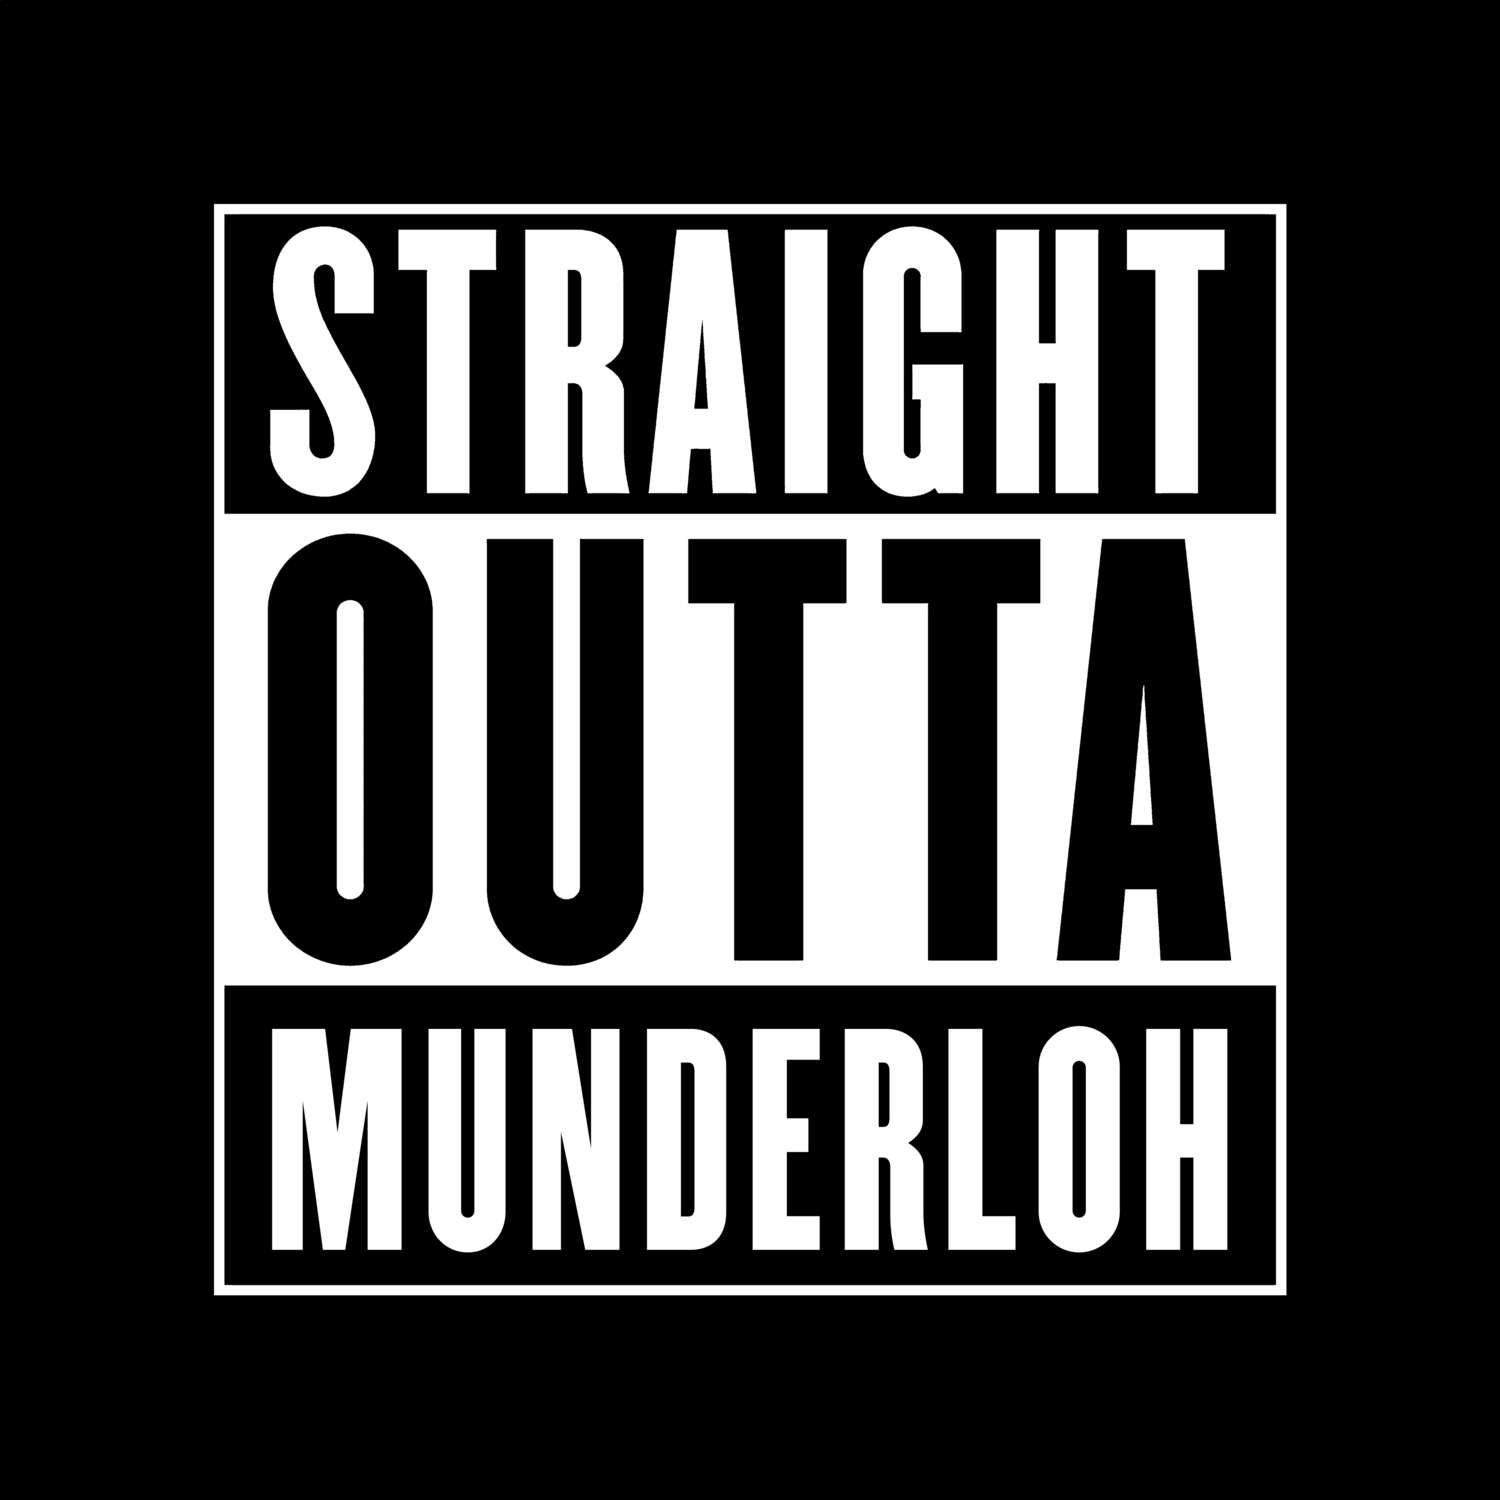 Munderloh T-Shirt »Straight Outta«